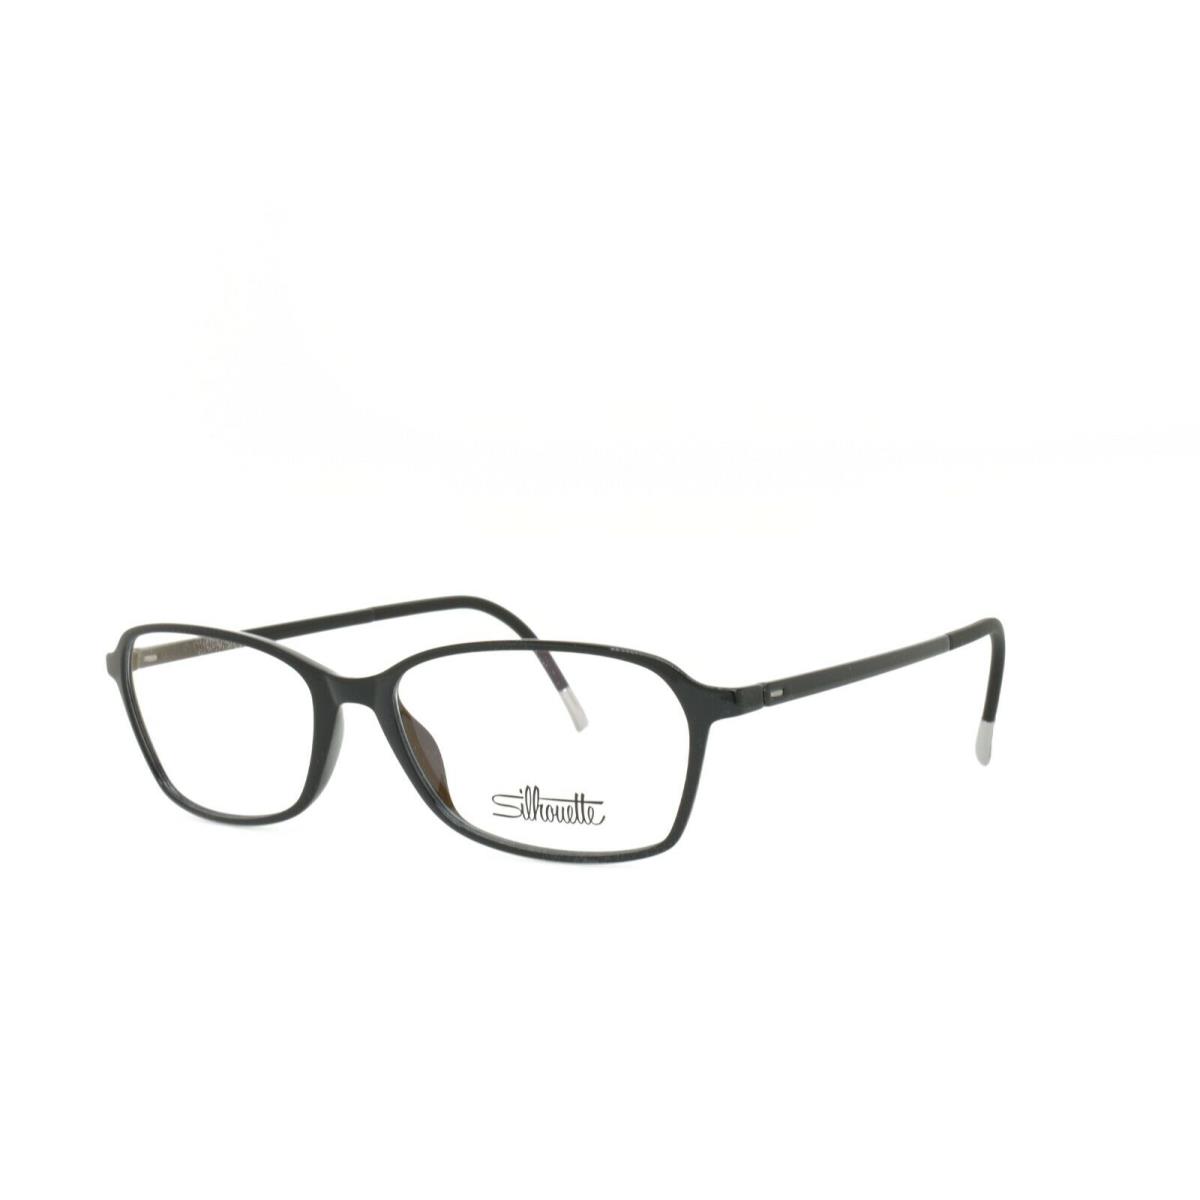 Silhouette Spx Illusion 1583 75 9010 Eyeglasses 52-15-130 Black - Black Frame